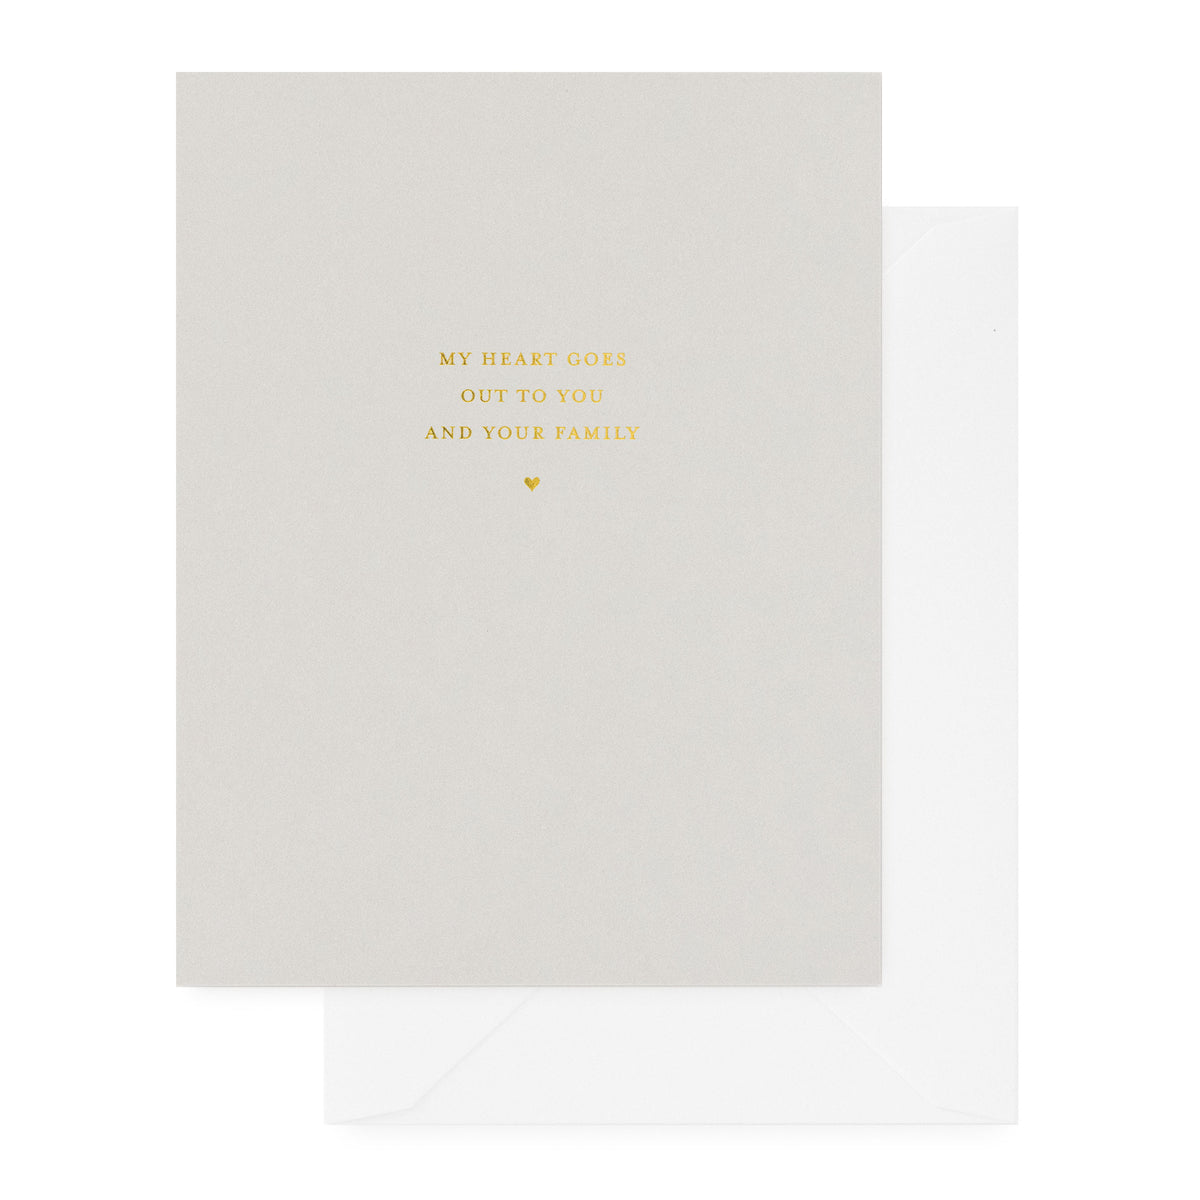 grey card with gold foil text, crisp white envelope